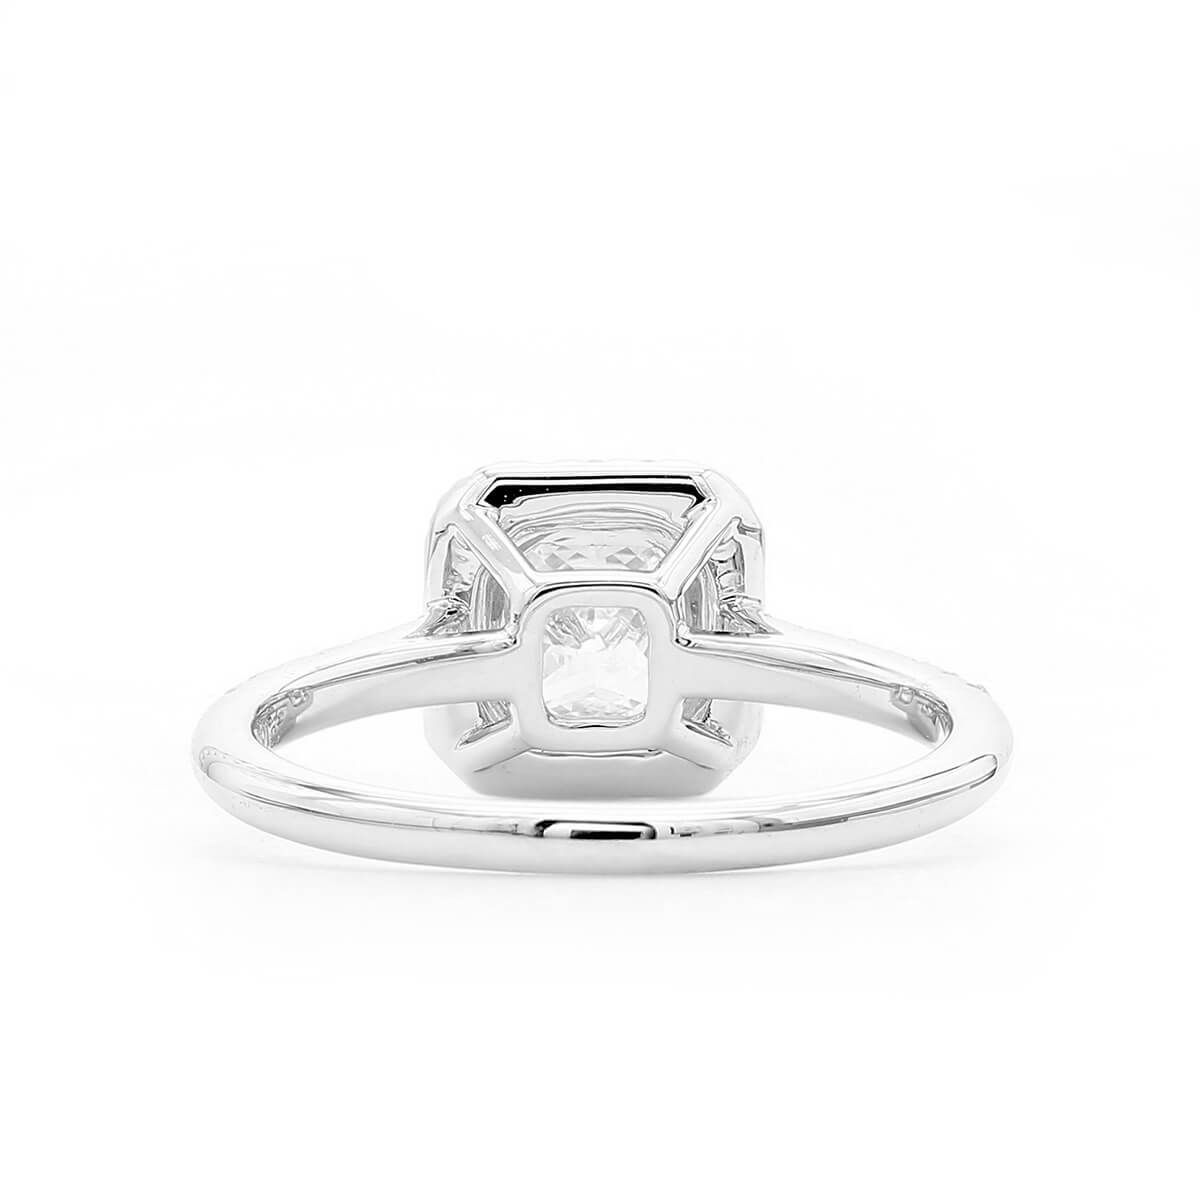  White Diamond Ring, 1.06 Ct. (1.34 Ct. TW), Radiant shape, GIA Certified, 7173077226